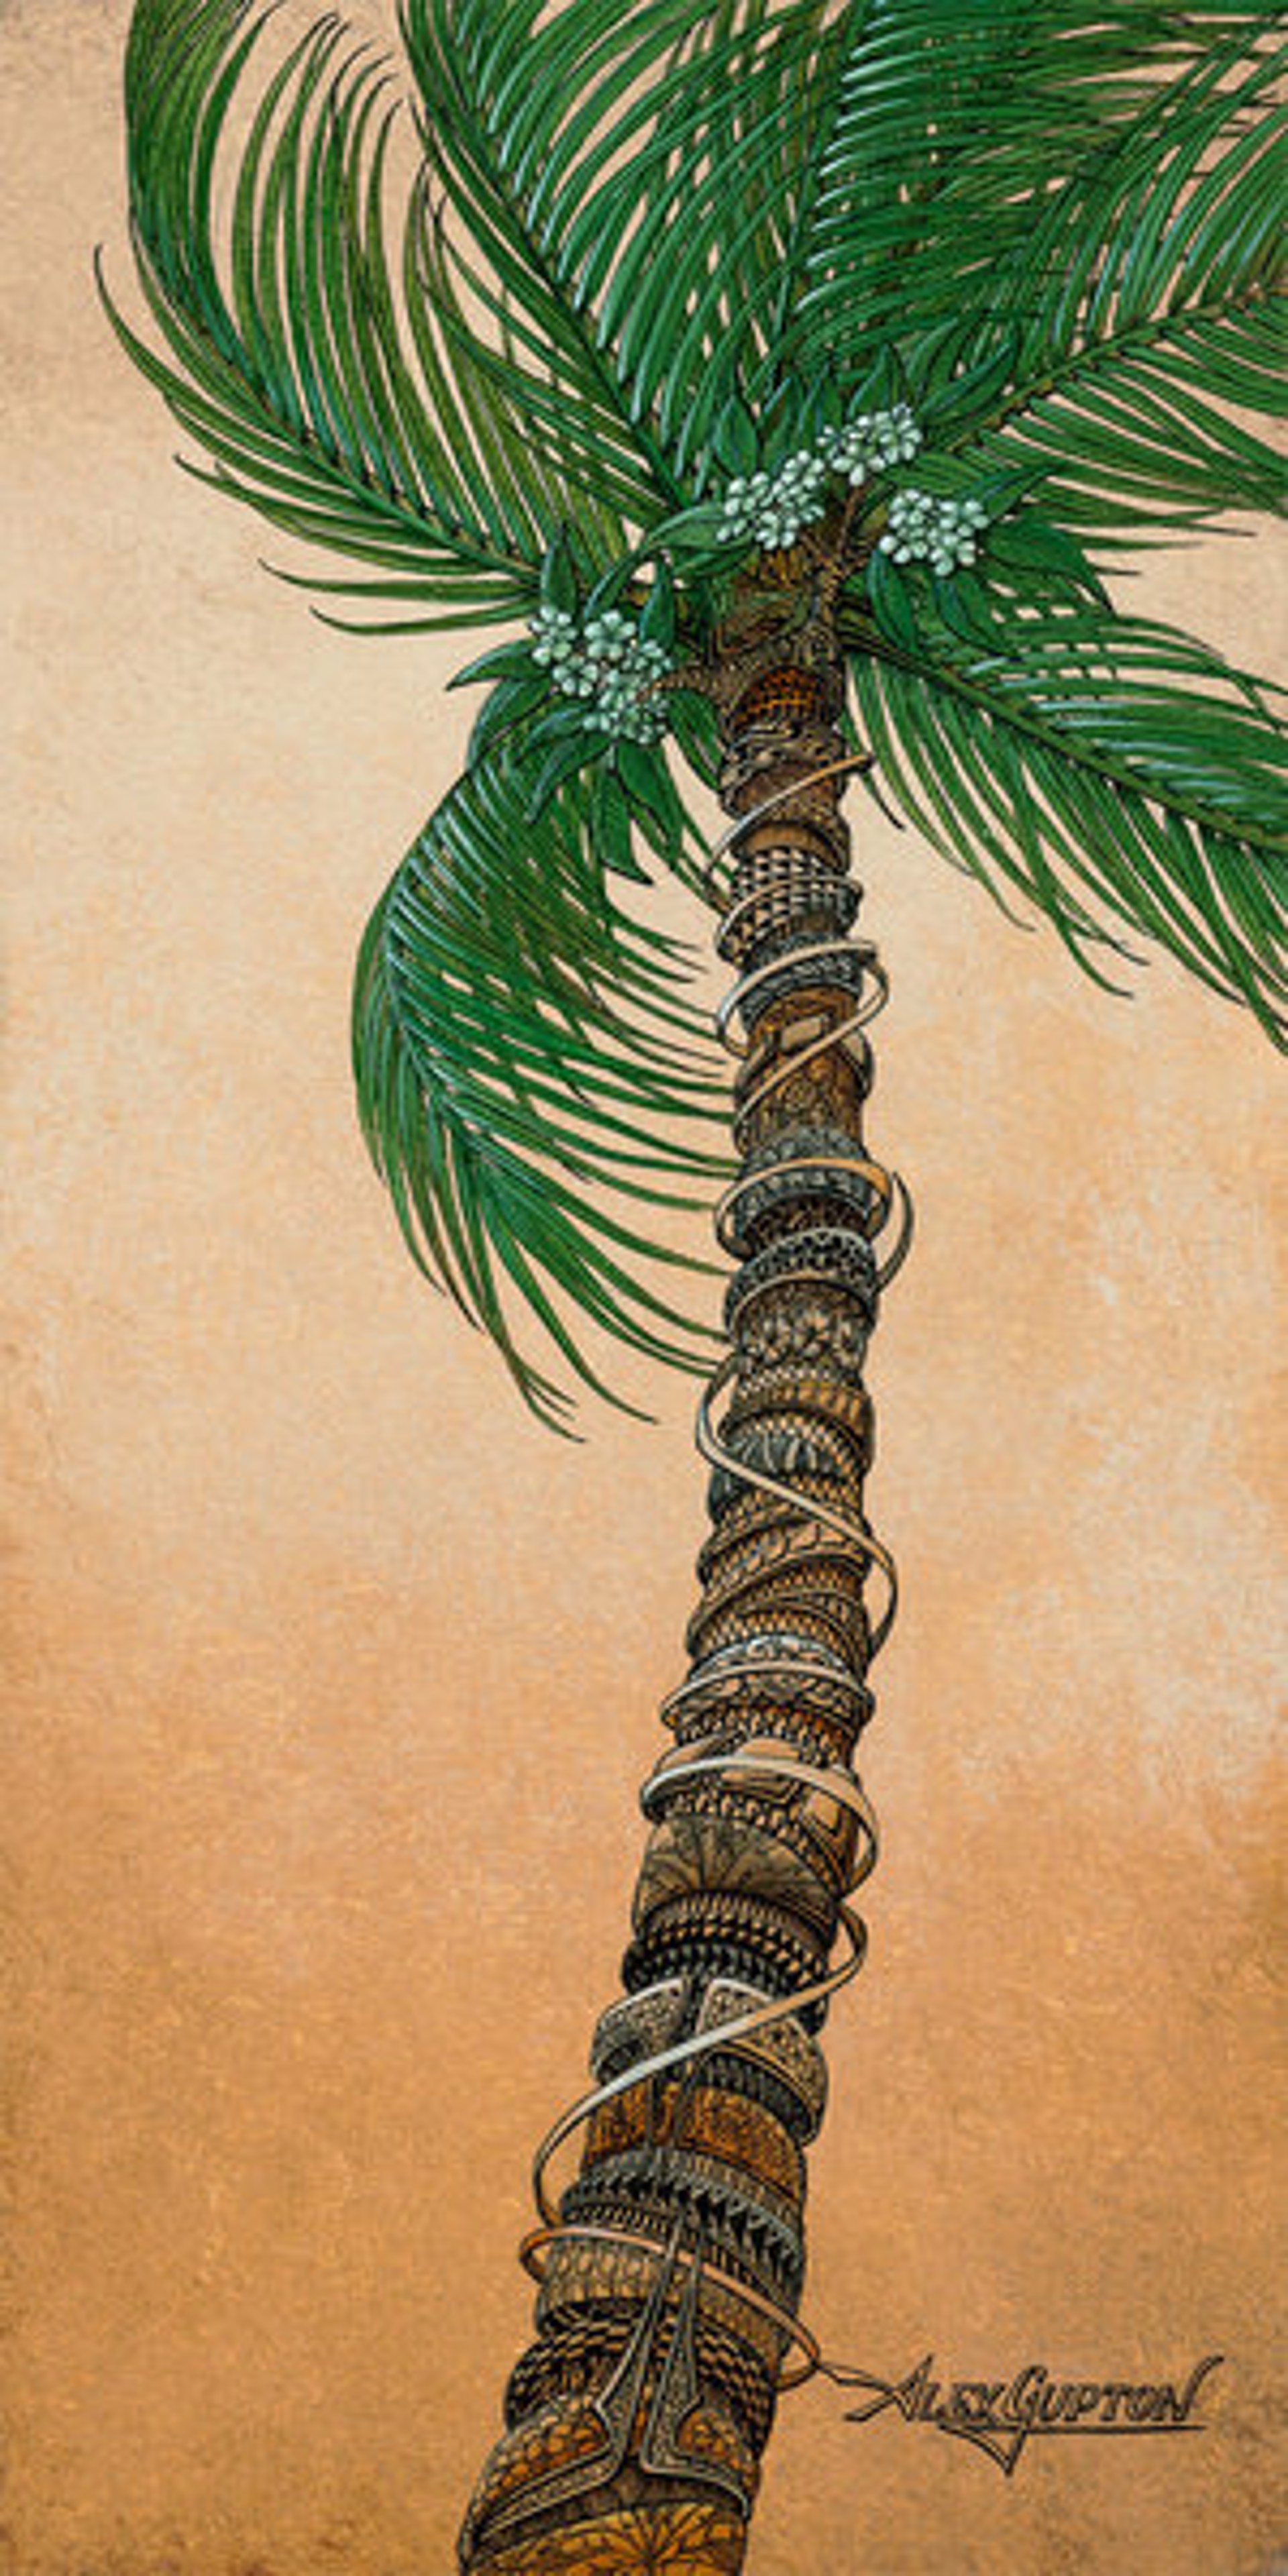 Palm Flower by Alex Gupton